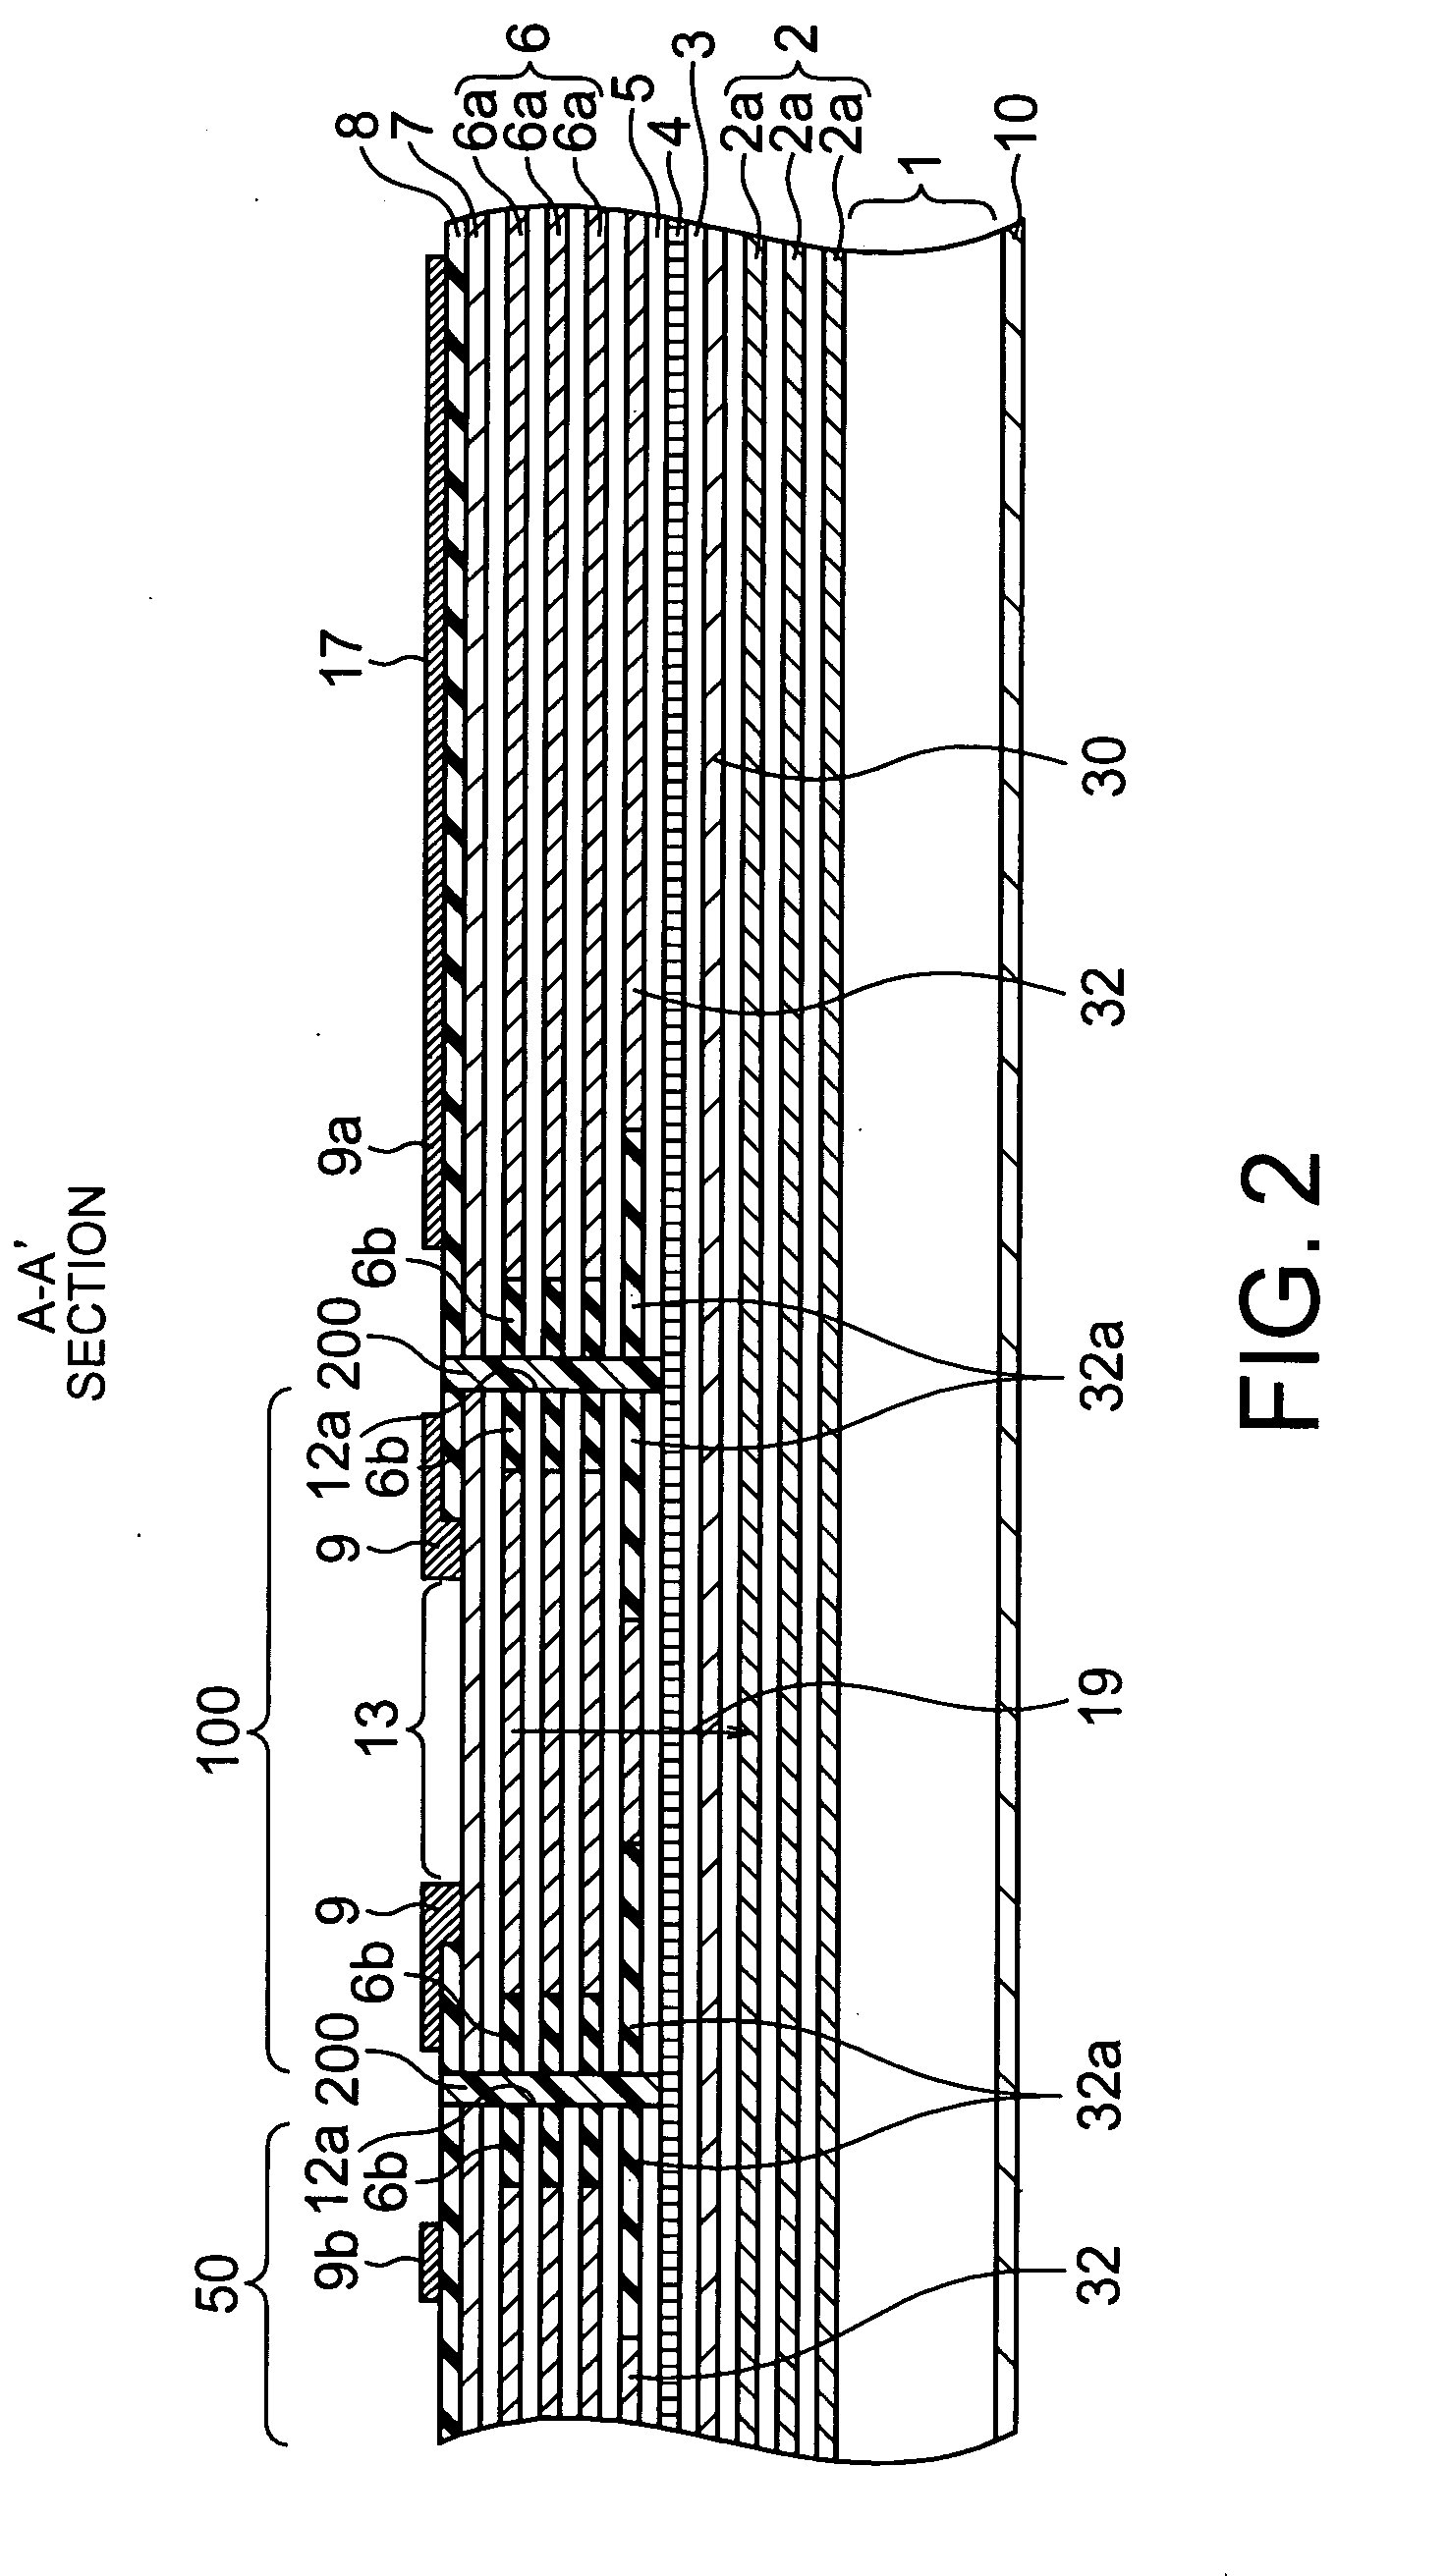 Vertical cavity surface emitting laser diode